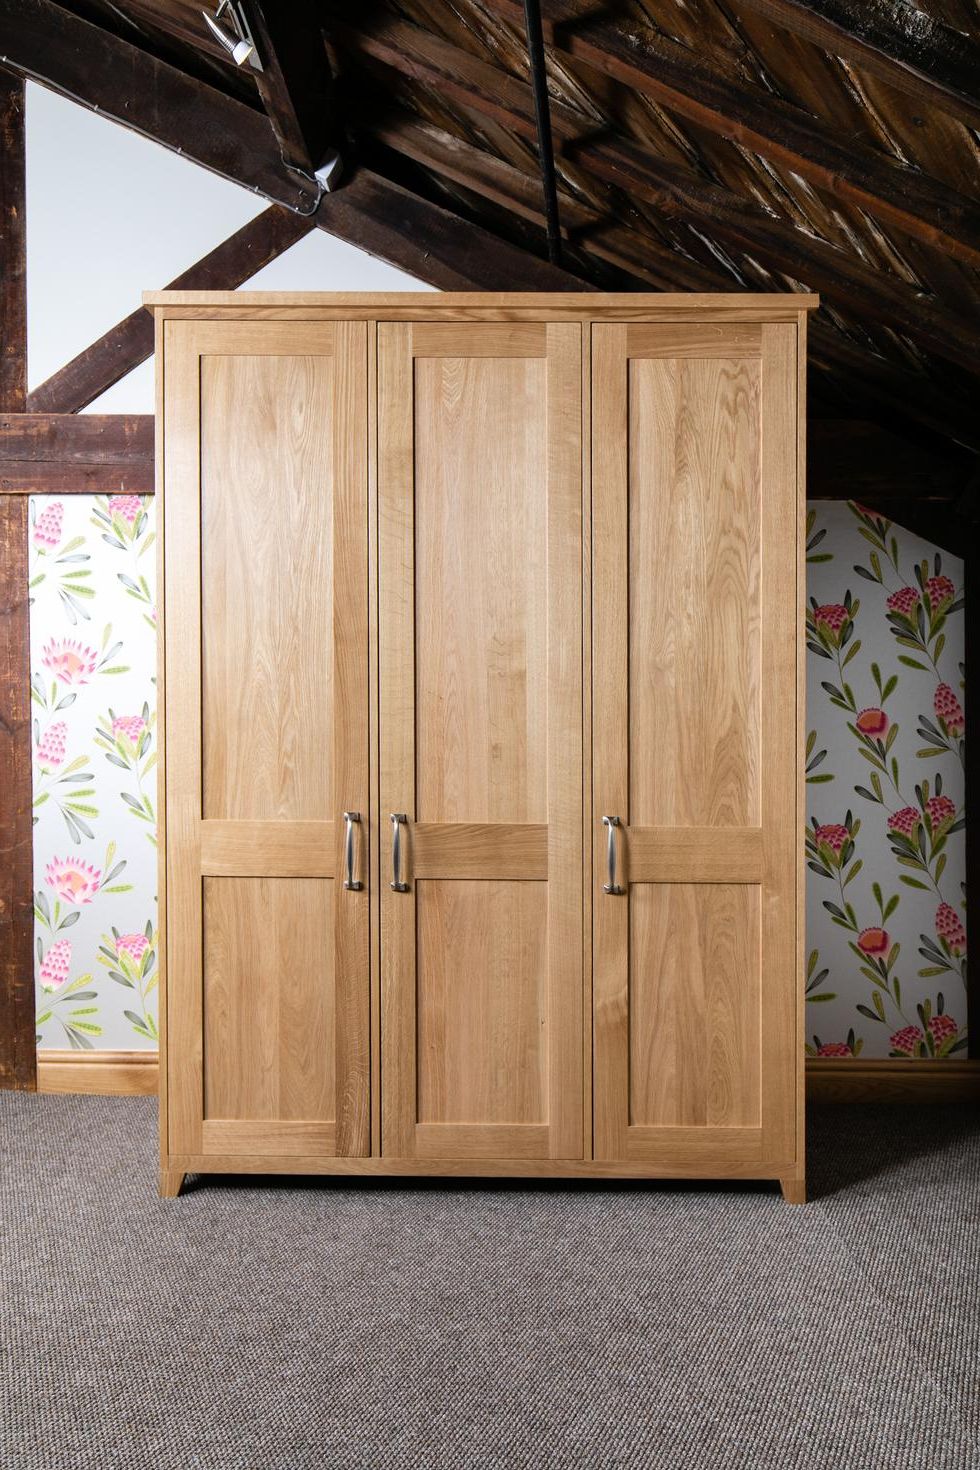 Masham 3 Door Wardrobe | Bespoke Hardwood Furniture From Treske With Oak 3 Door Wardrobes (Gallery 13 of 20)